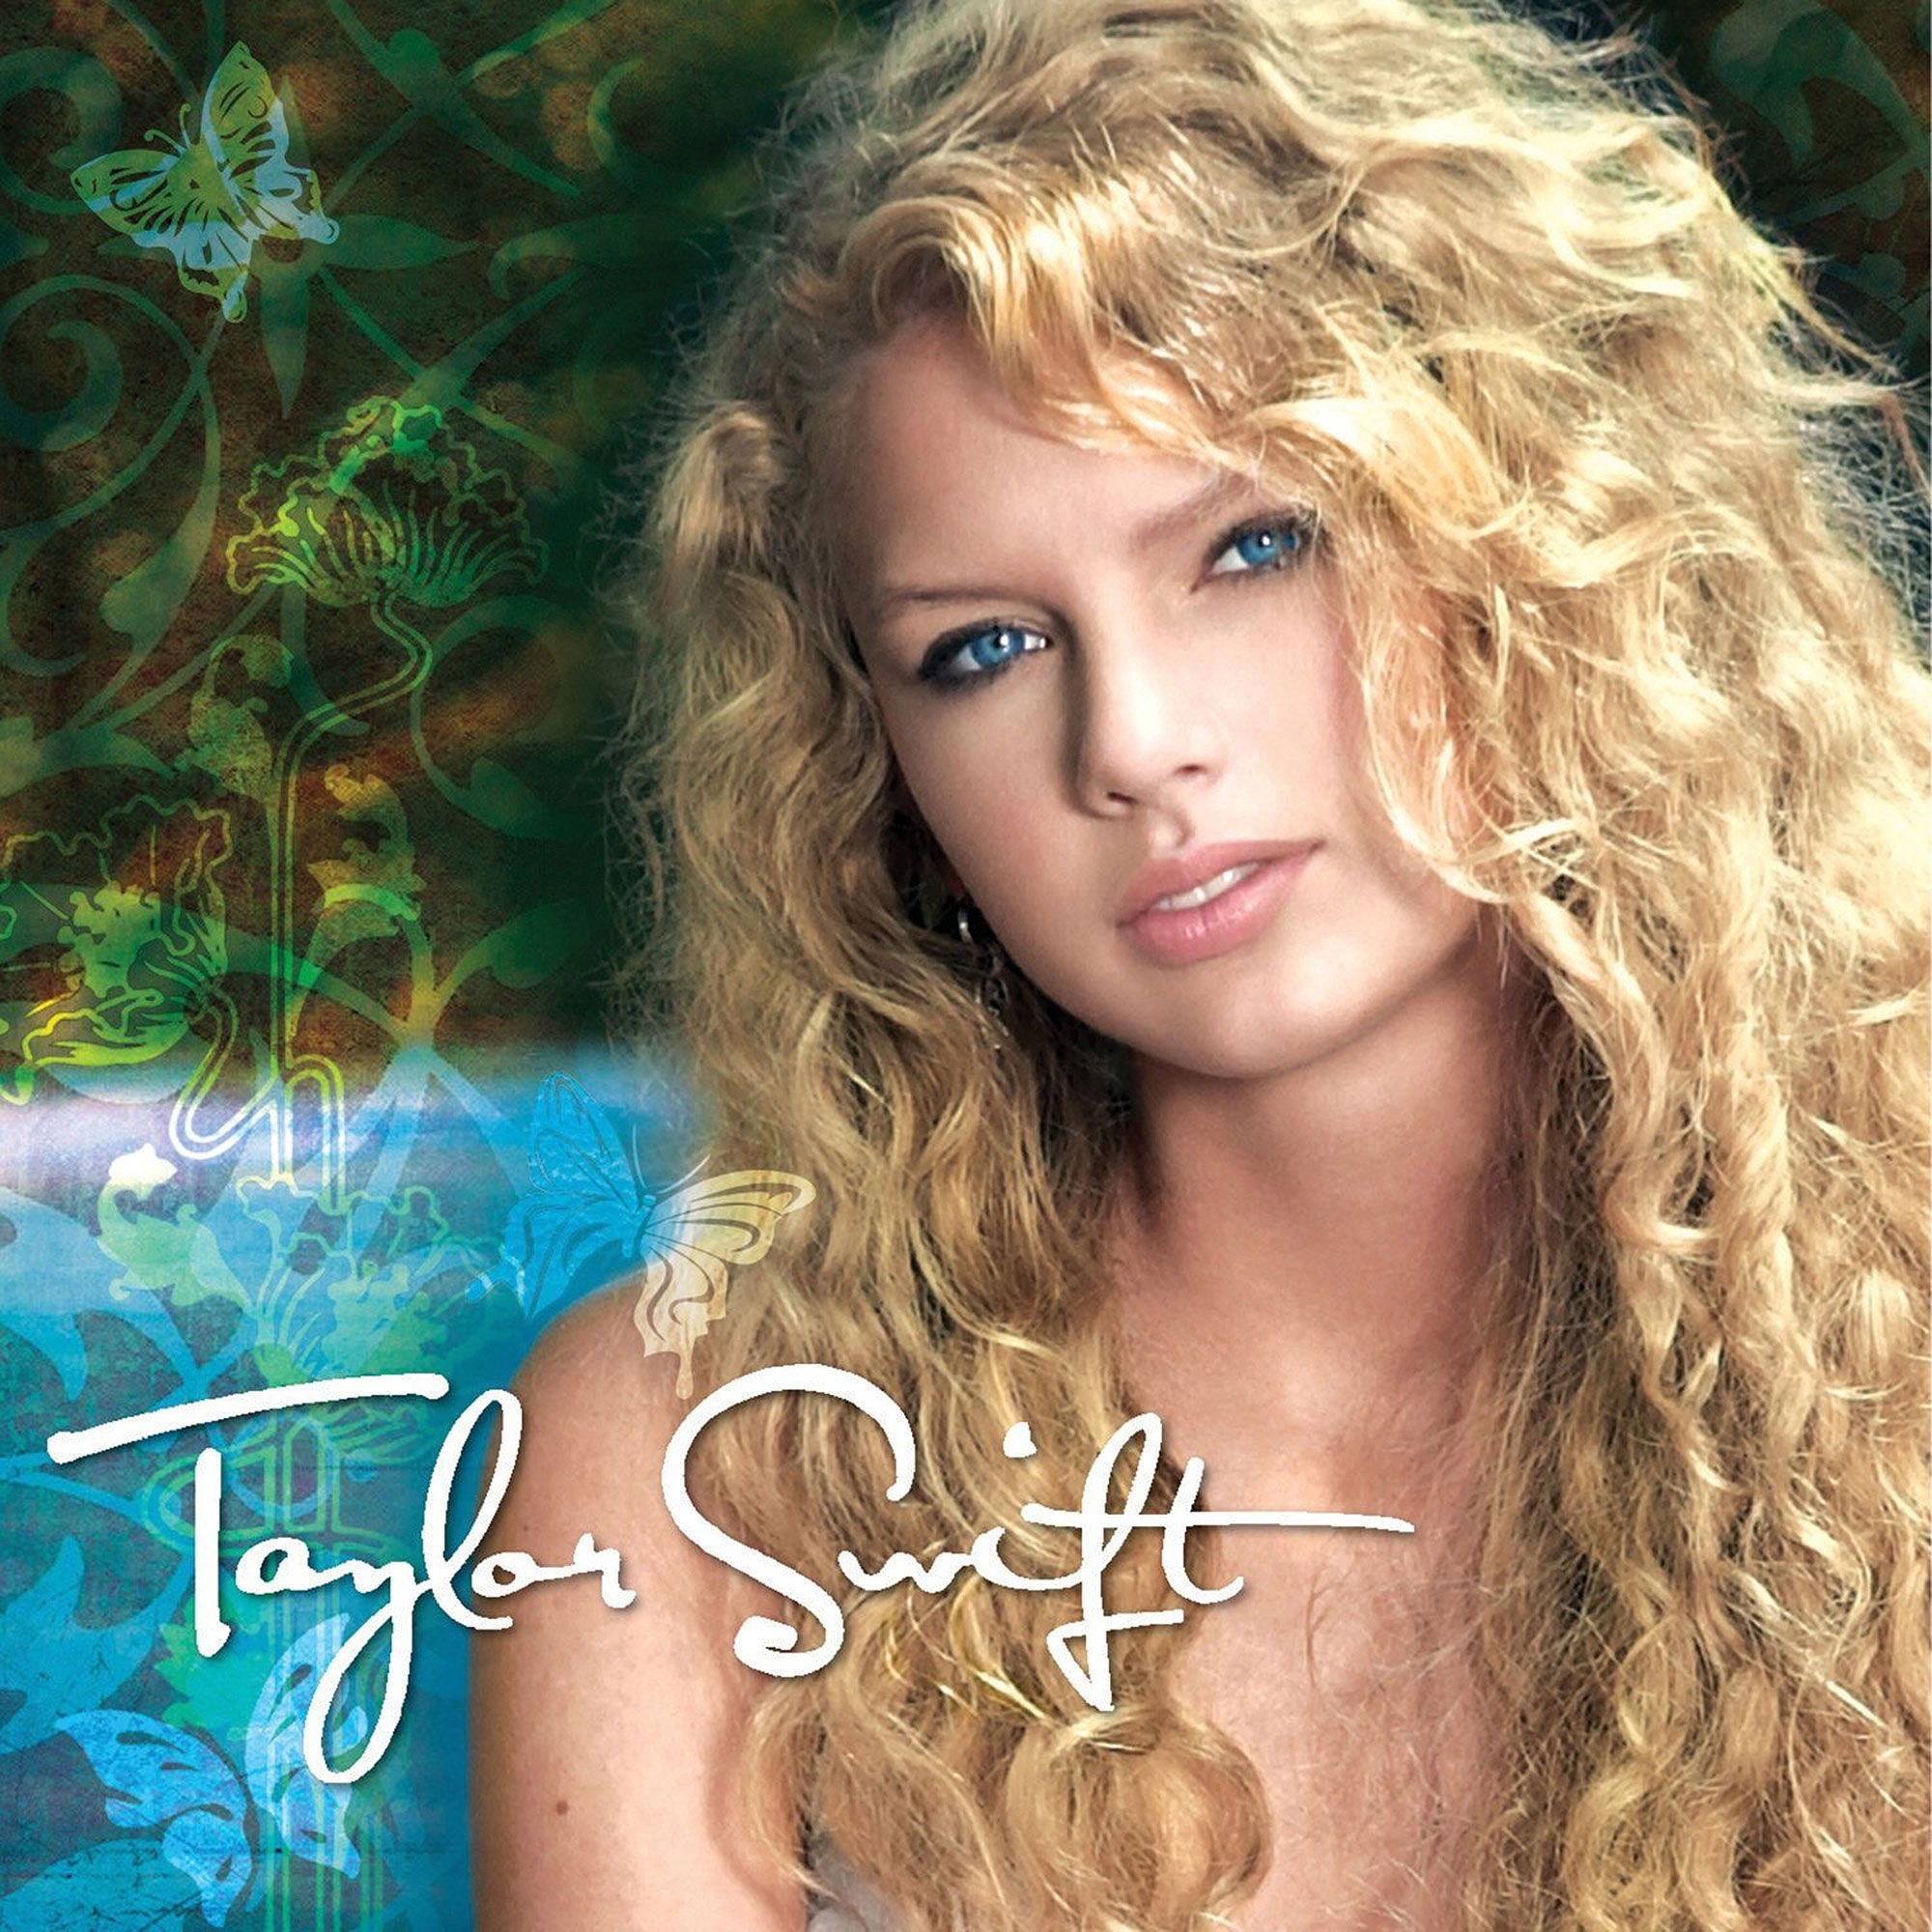 Fearless (Taylor Swift album) - Wikipedia